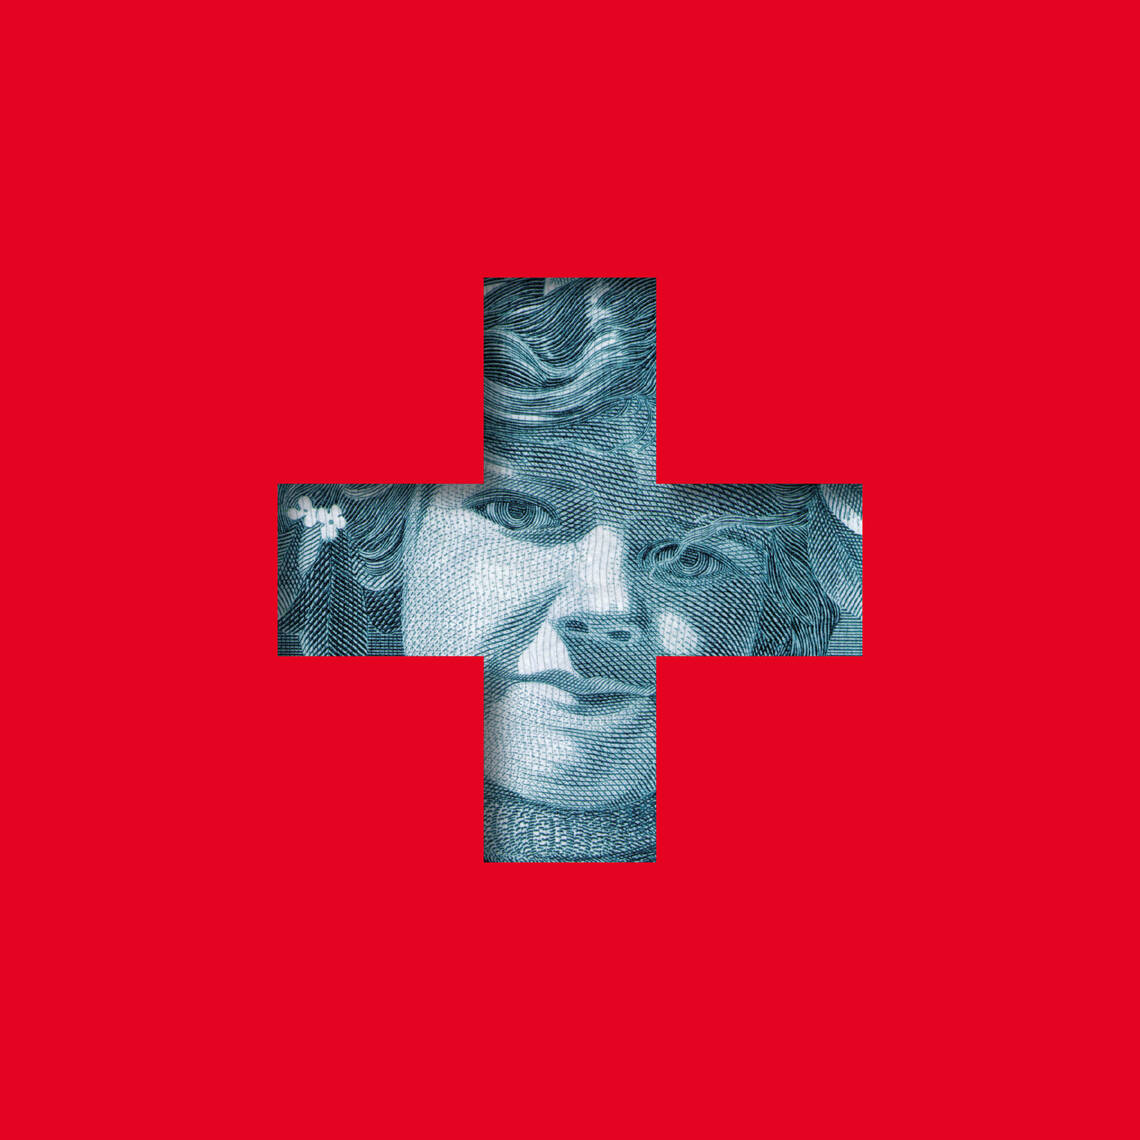 Key visual of the "History of Switzerland" exhibition